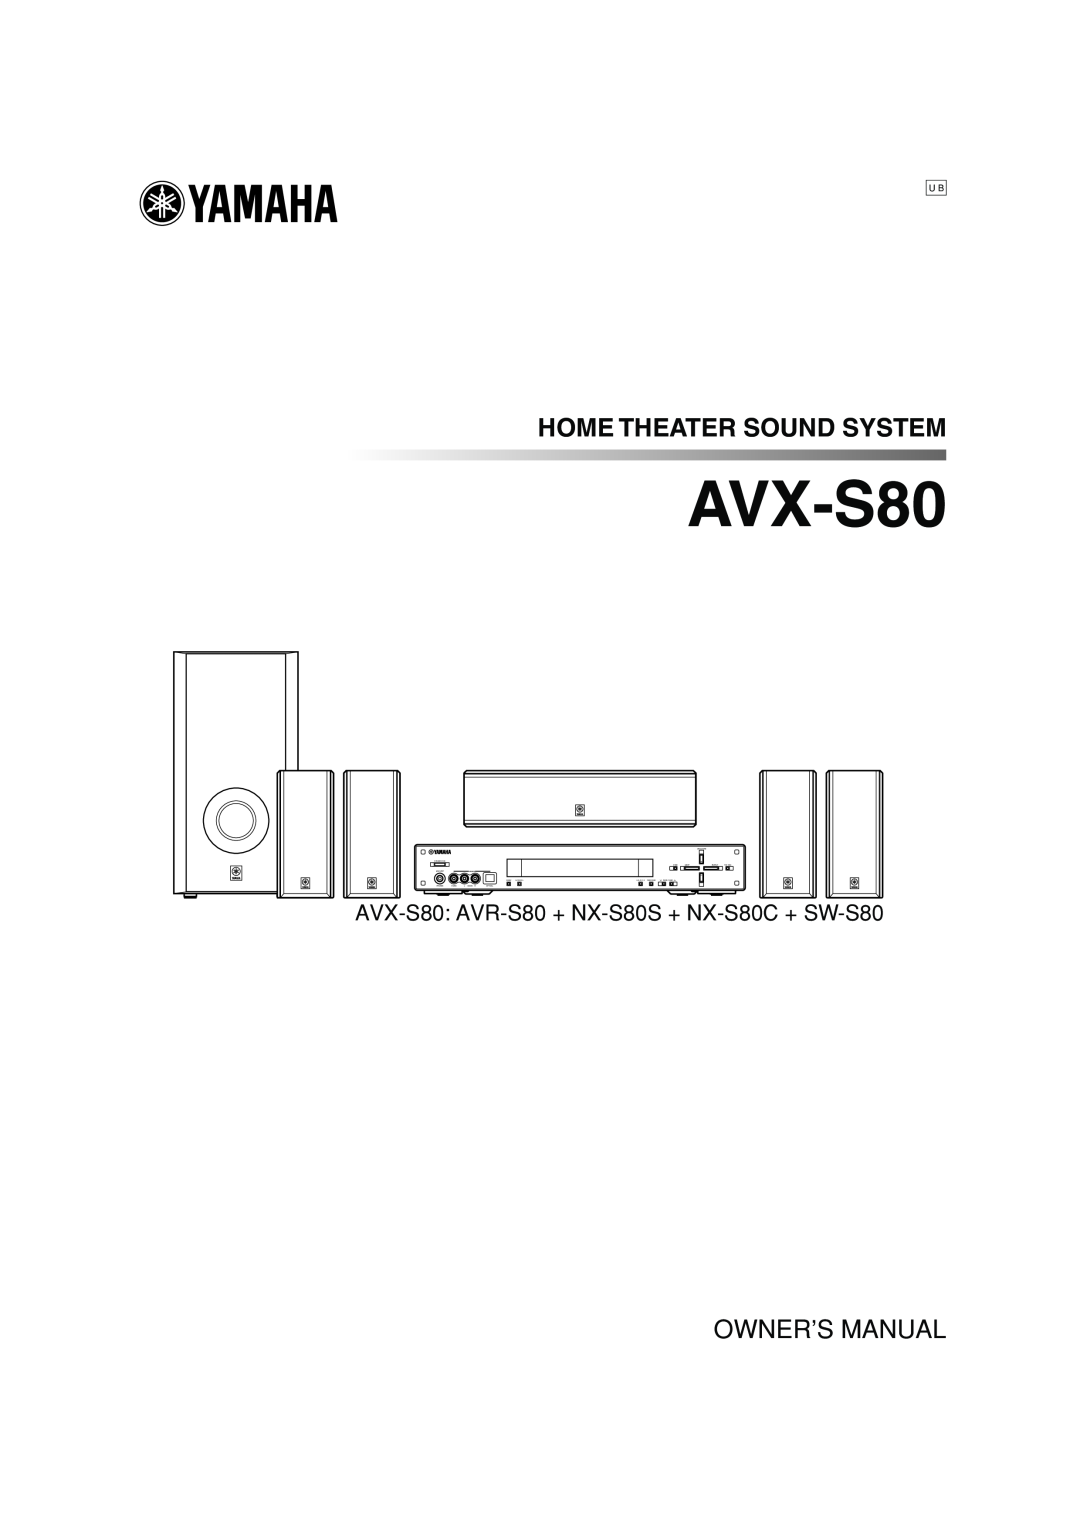 Yamaha HOMETHEATER SOUND SYSTEM owner manual AVX-S80, Home Theater Sound System, Owner’S Manual 